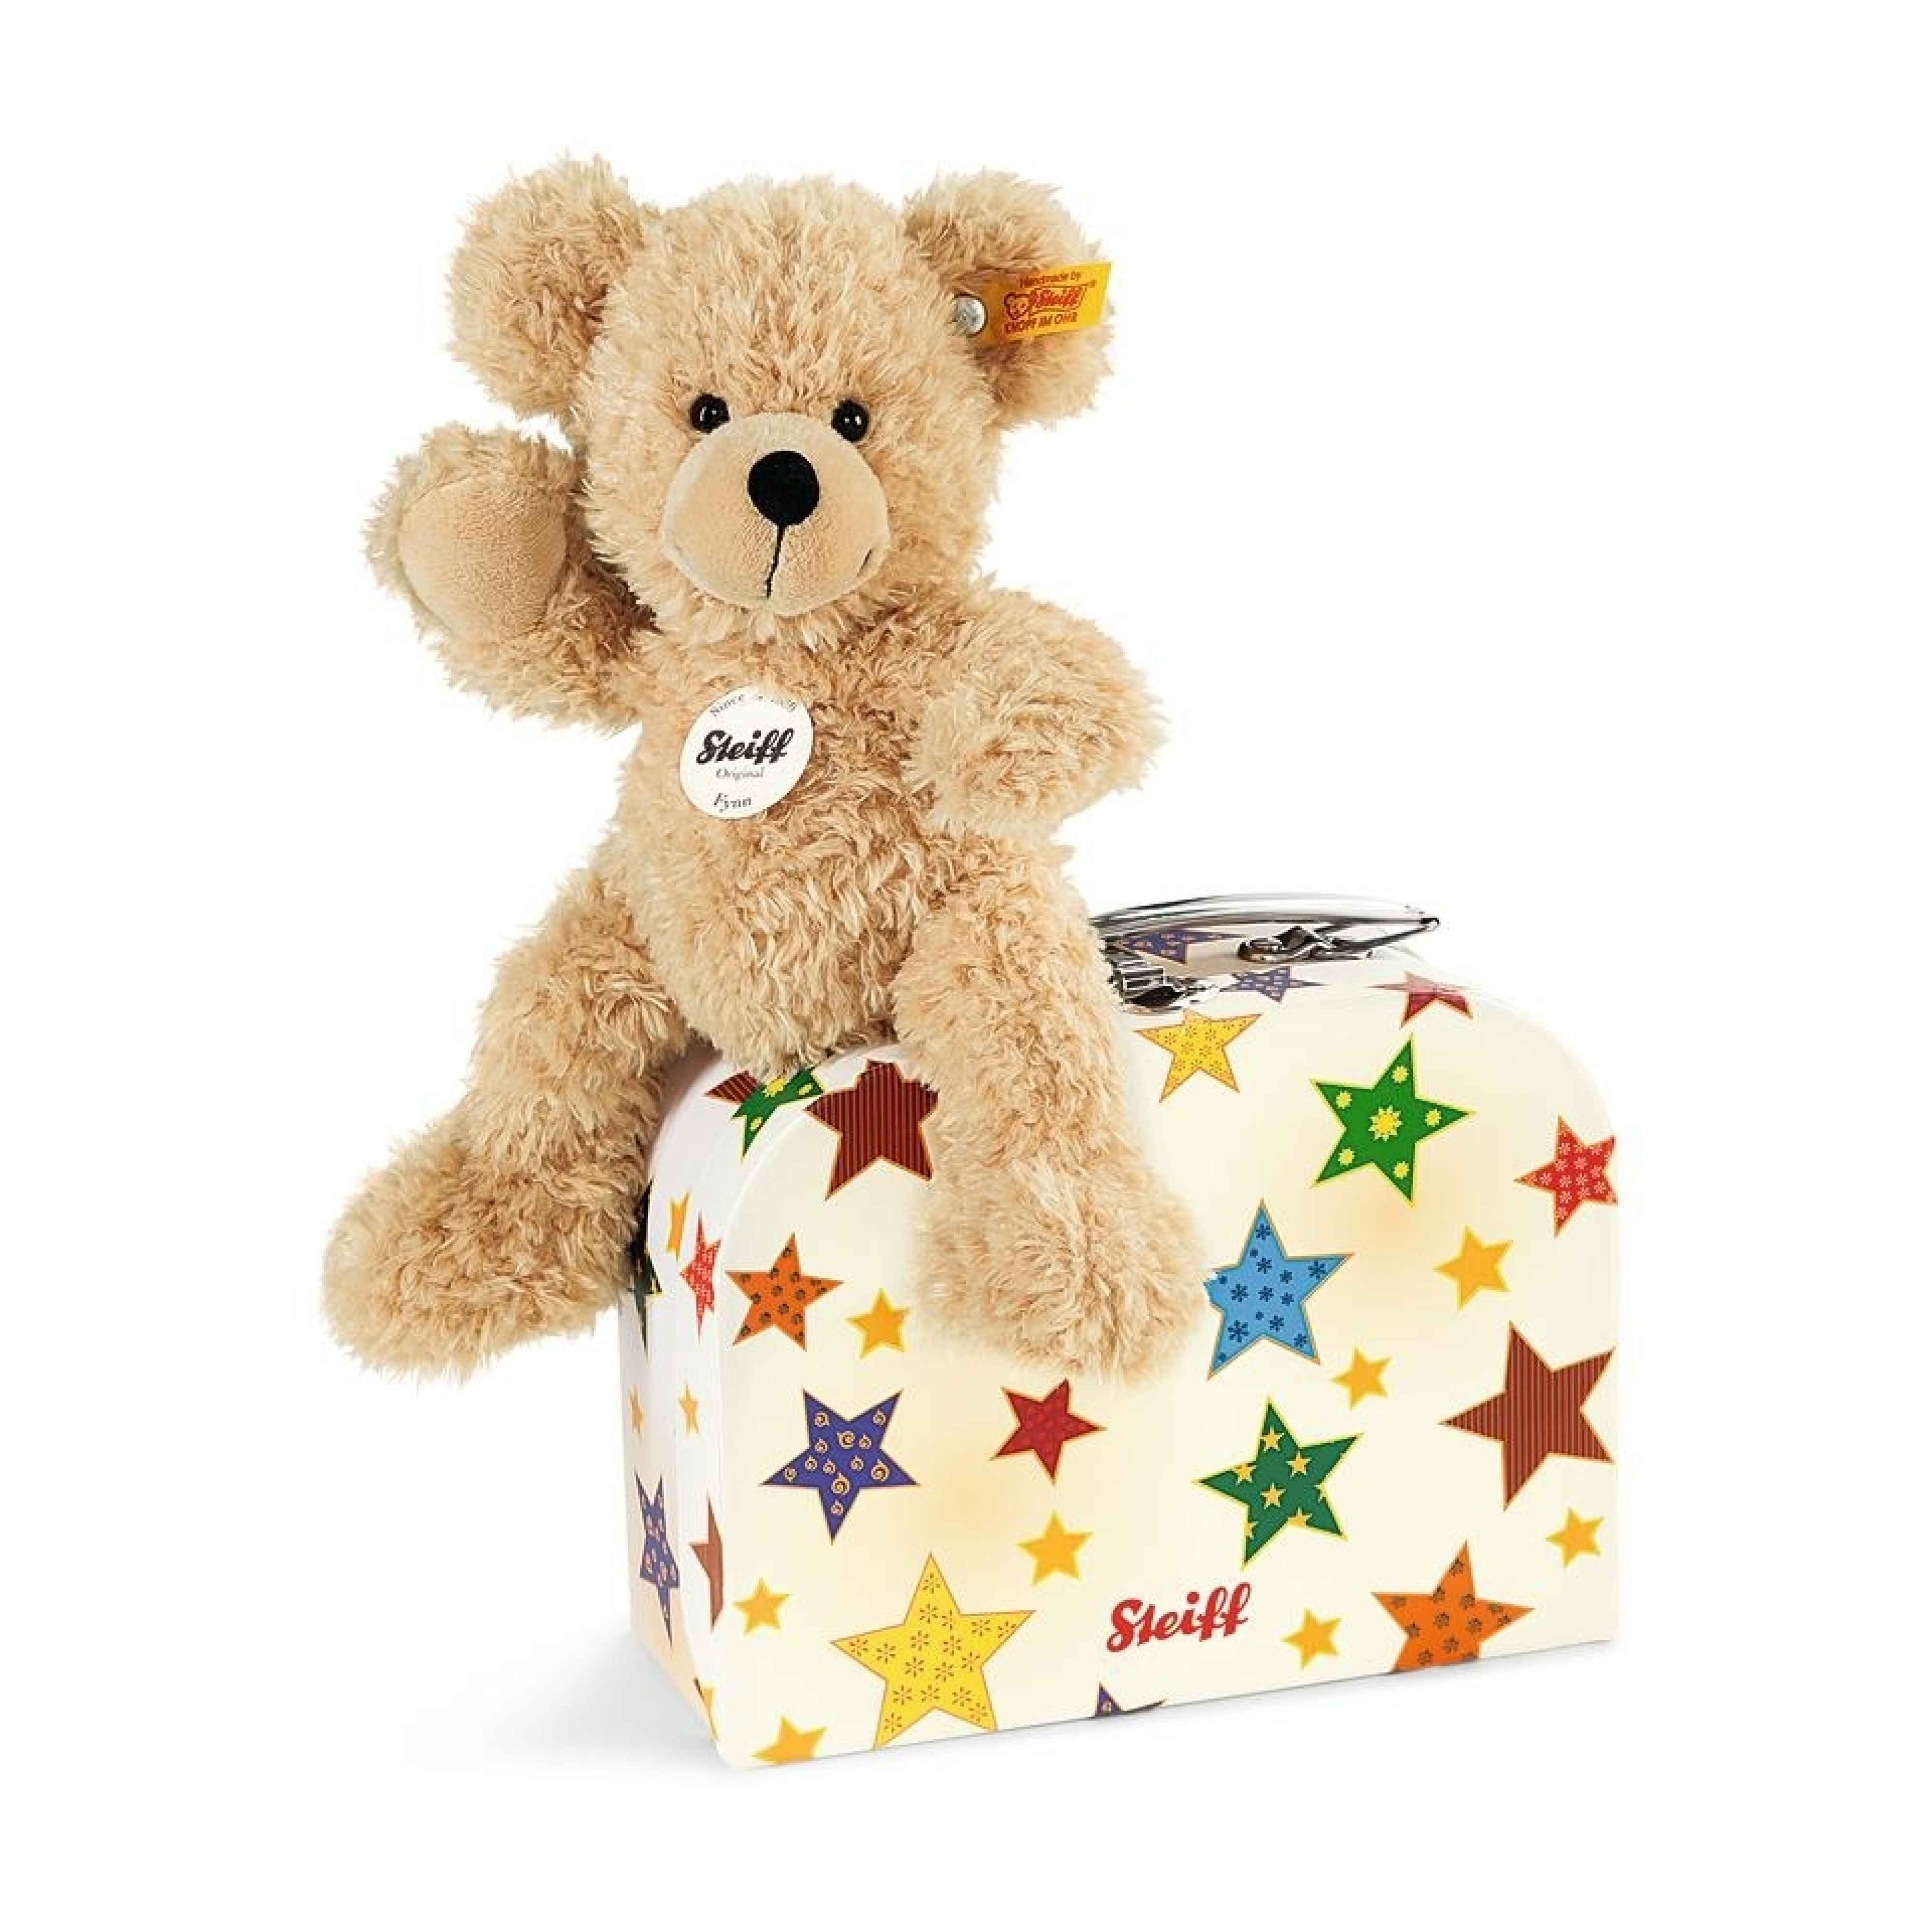 Steiff Fynn Teddy Bear In Star Suitcase 23cm 111730 